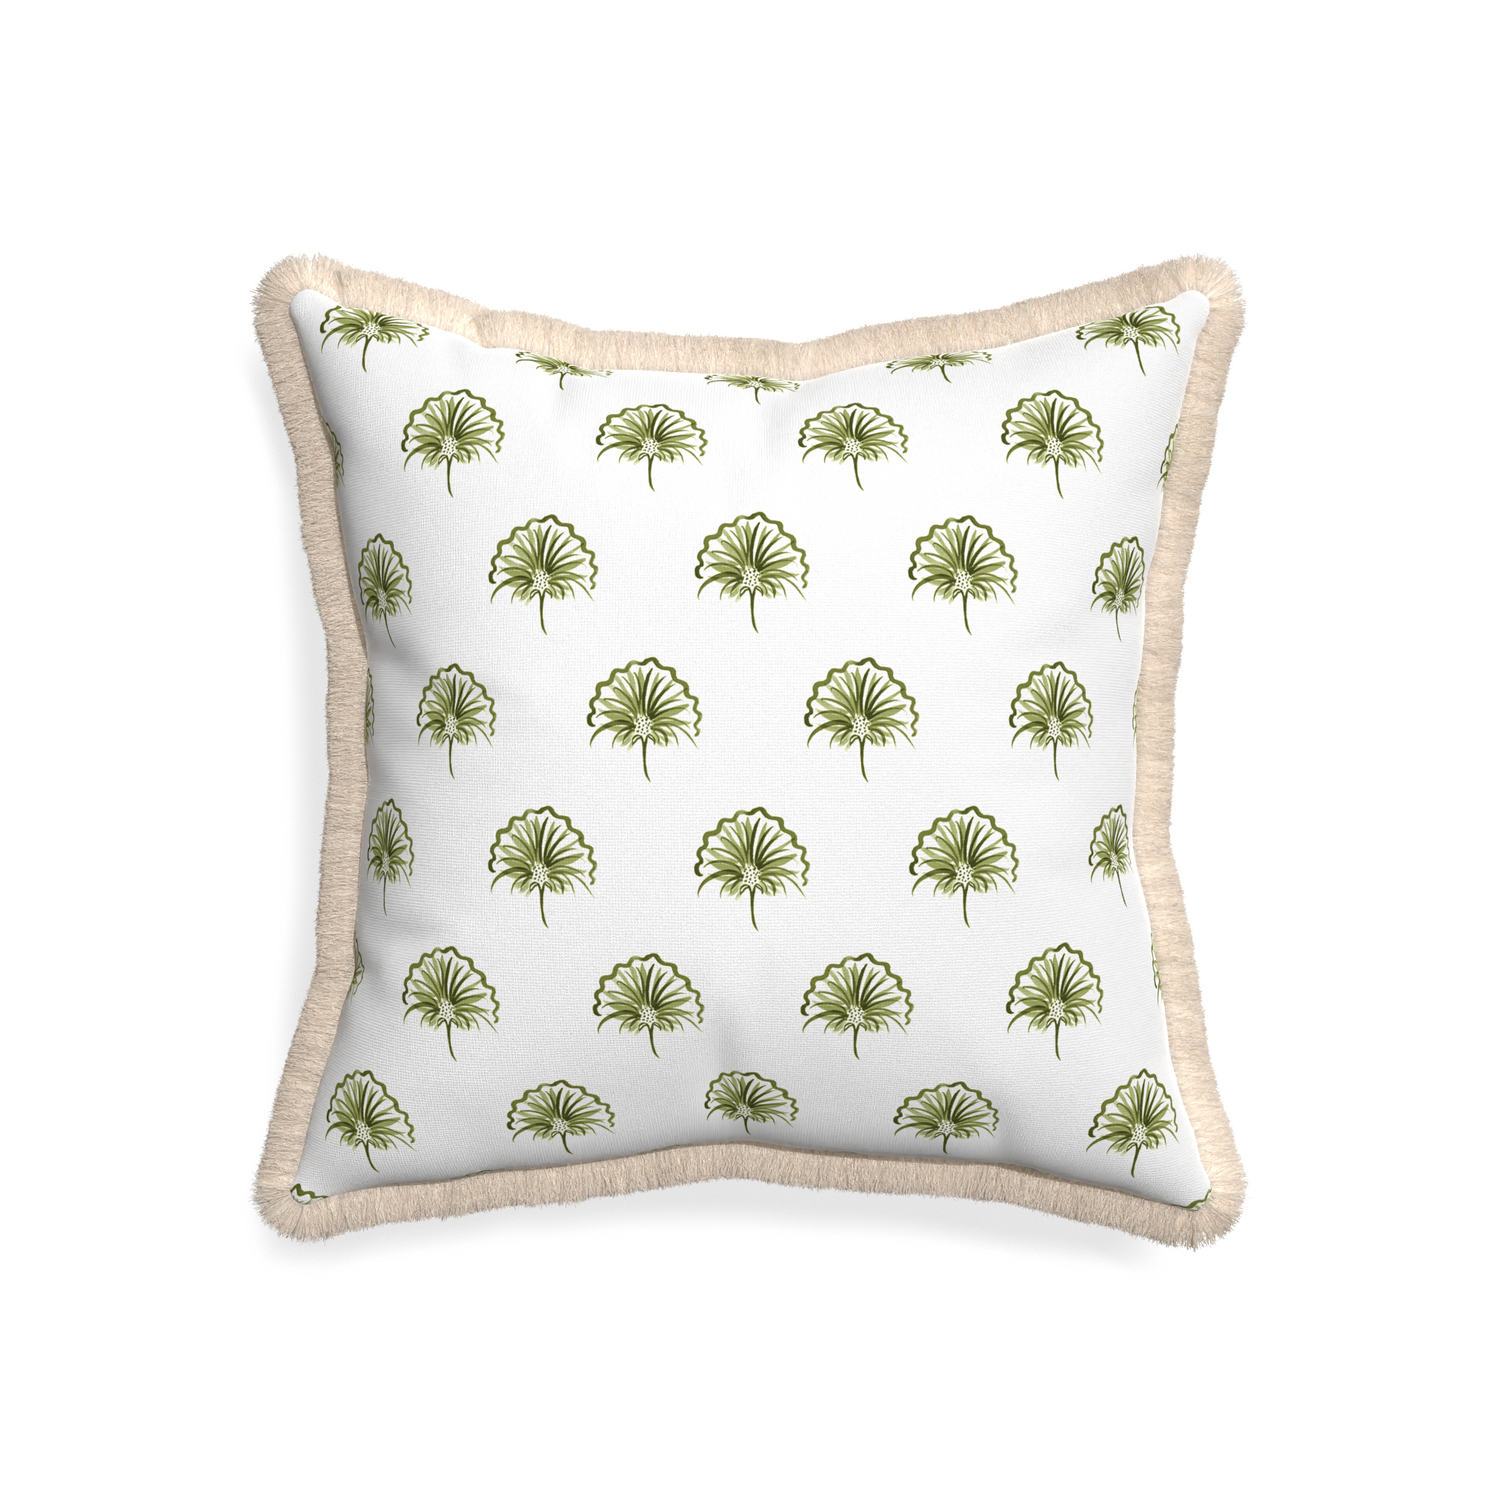 20-square penelope moss custom pillow with cream fringe on white background